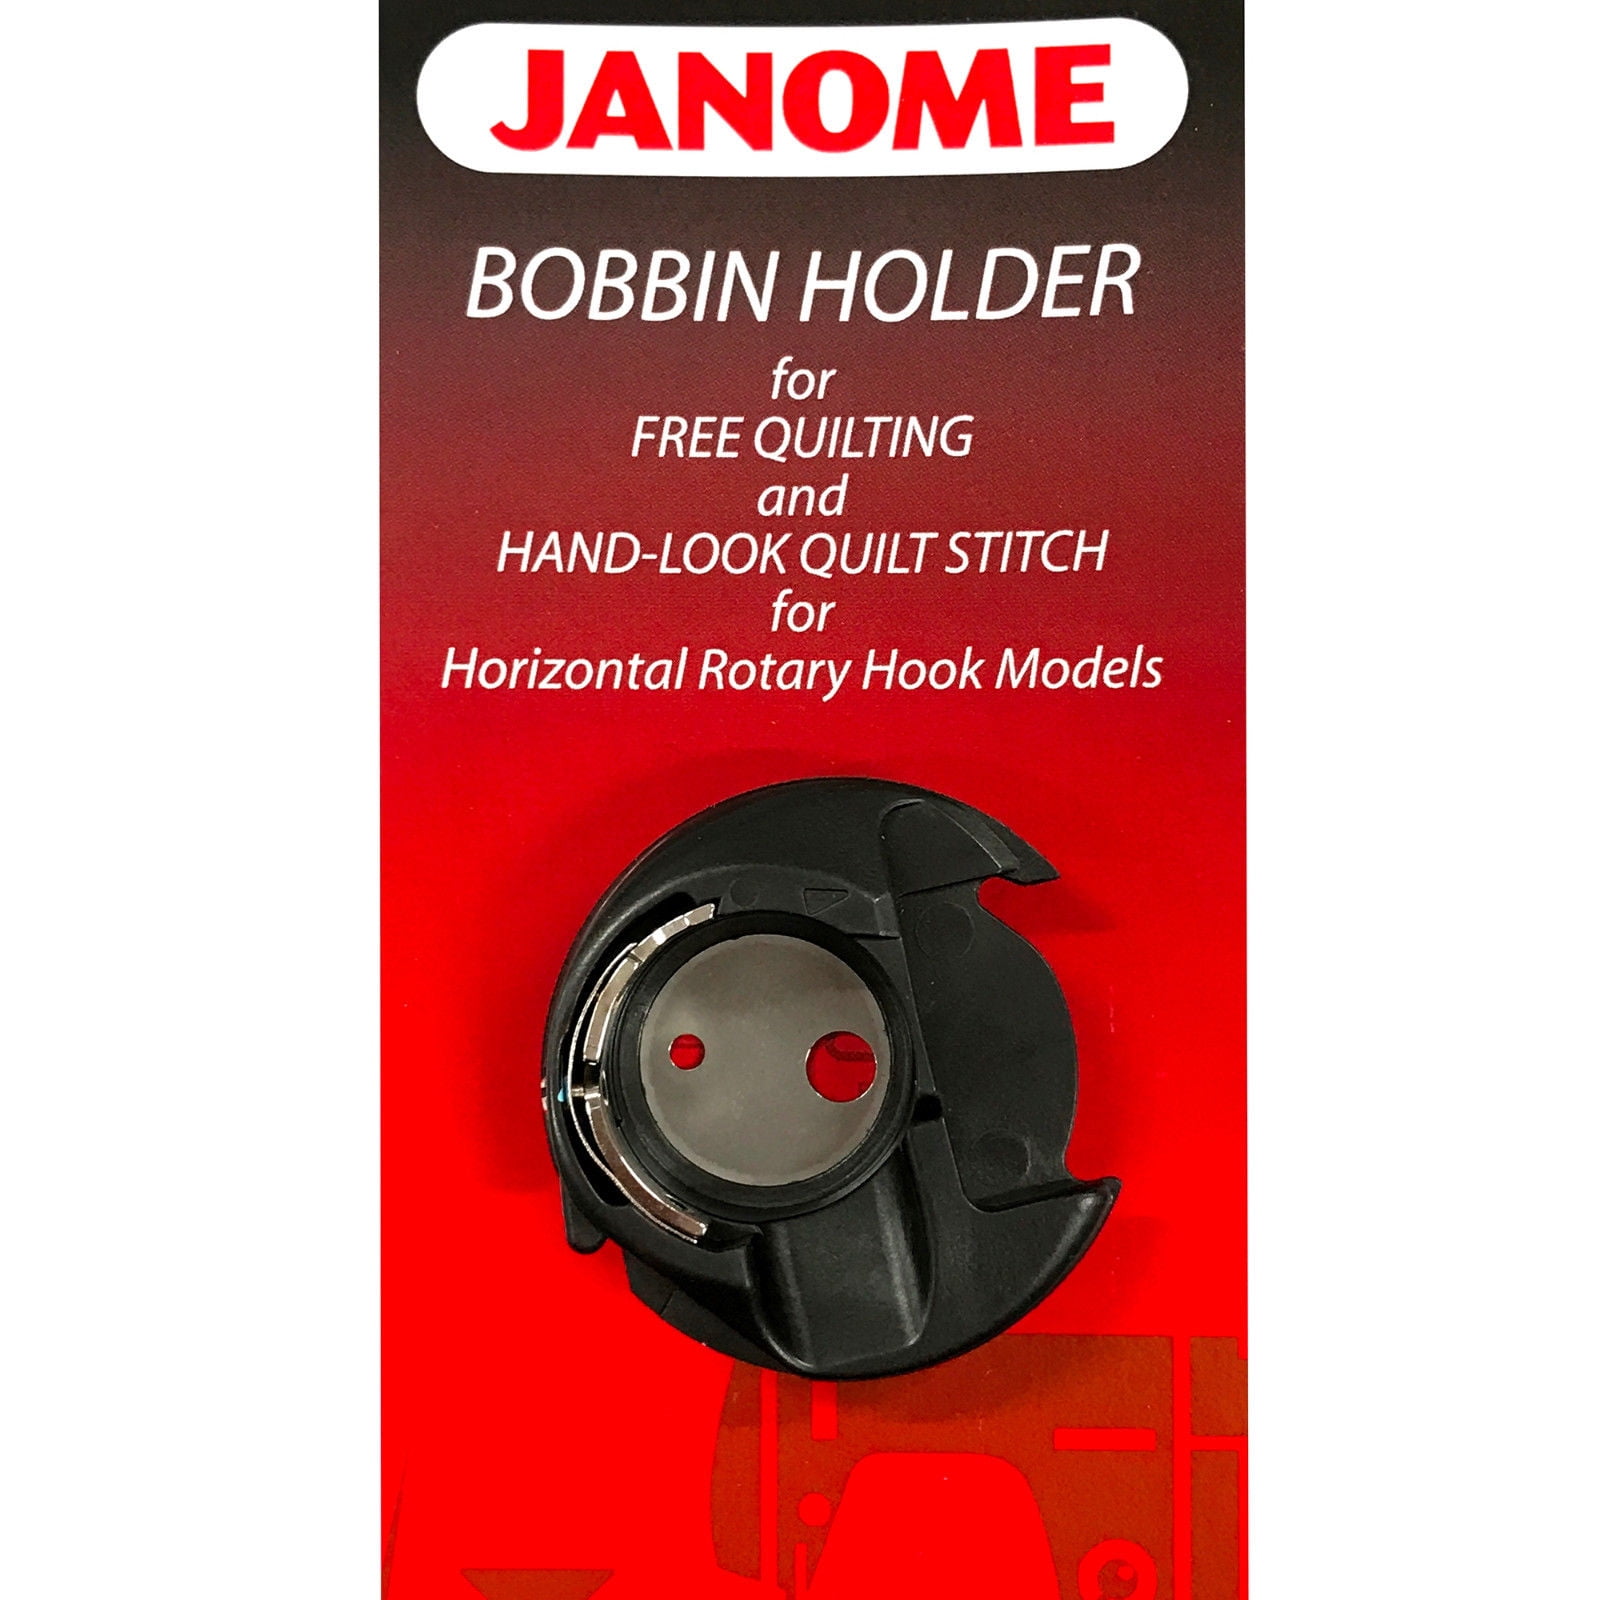 Janome Bobbin Holder #202006008 for Horizontal Rotary Hook Machines 